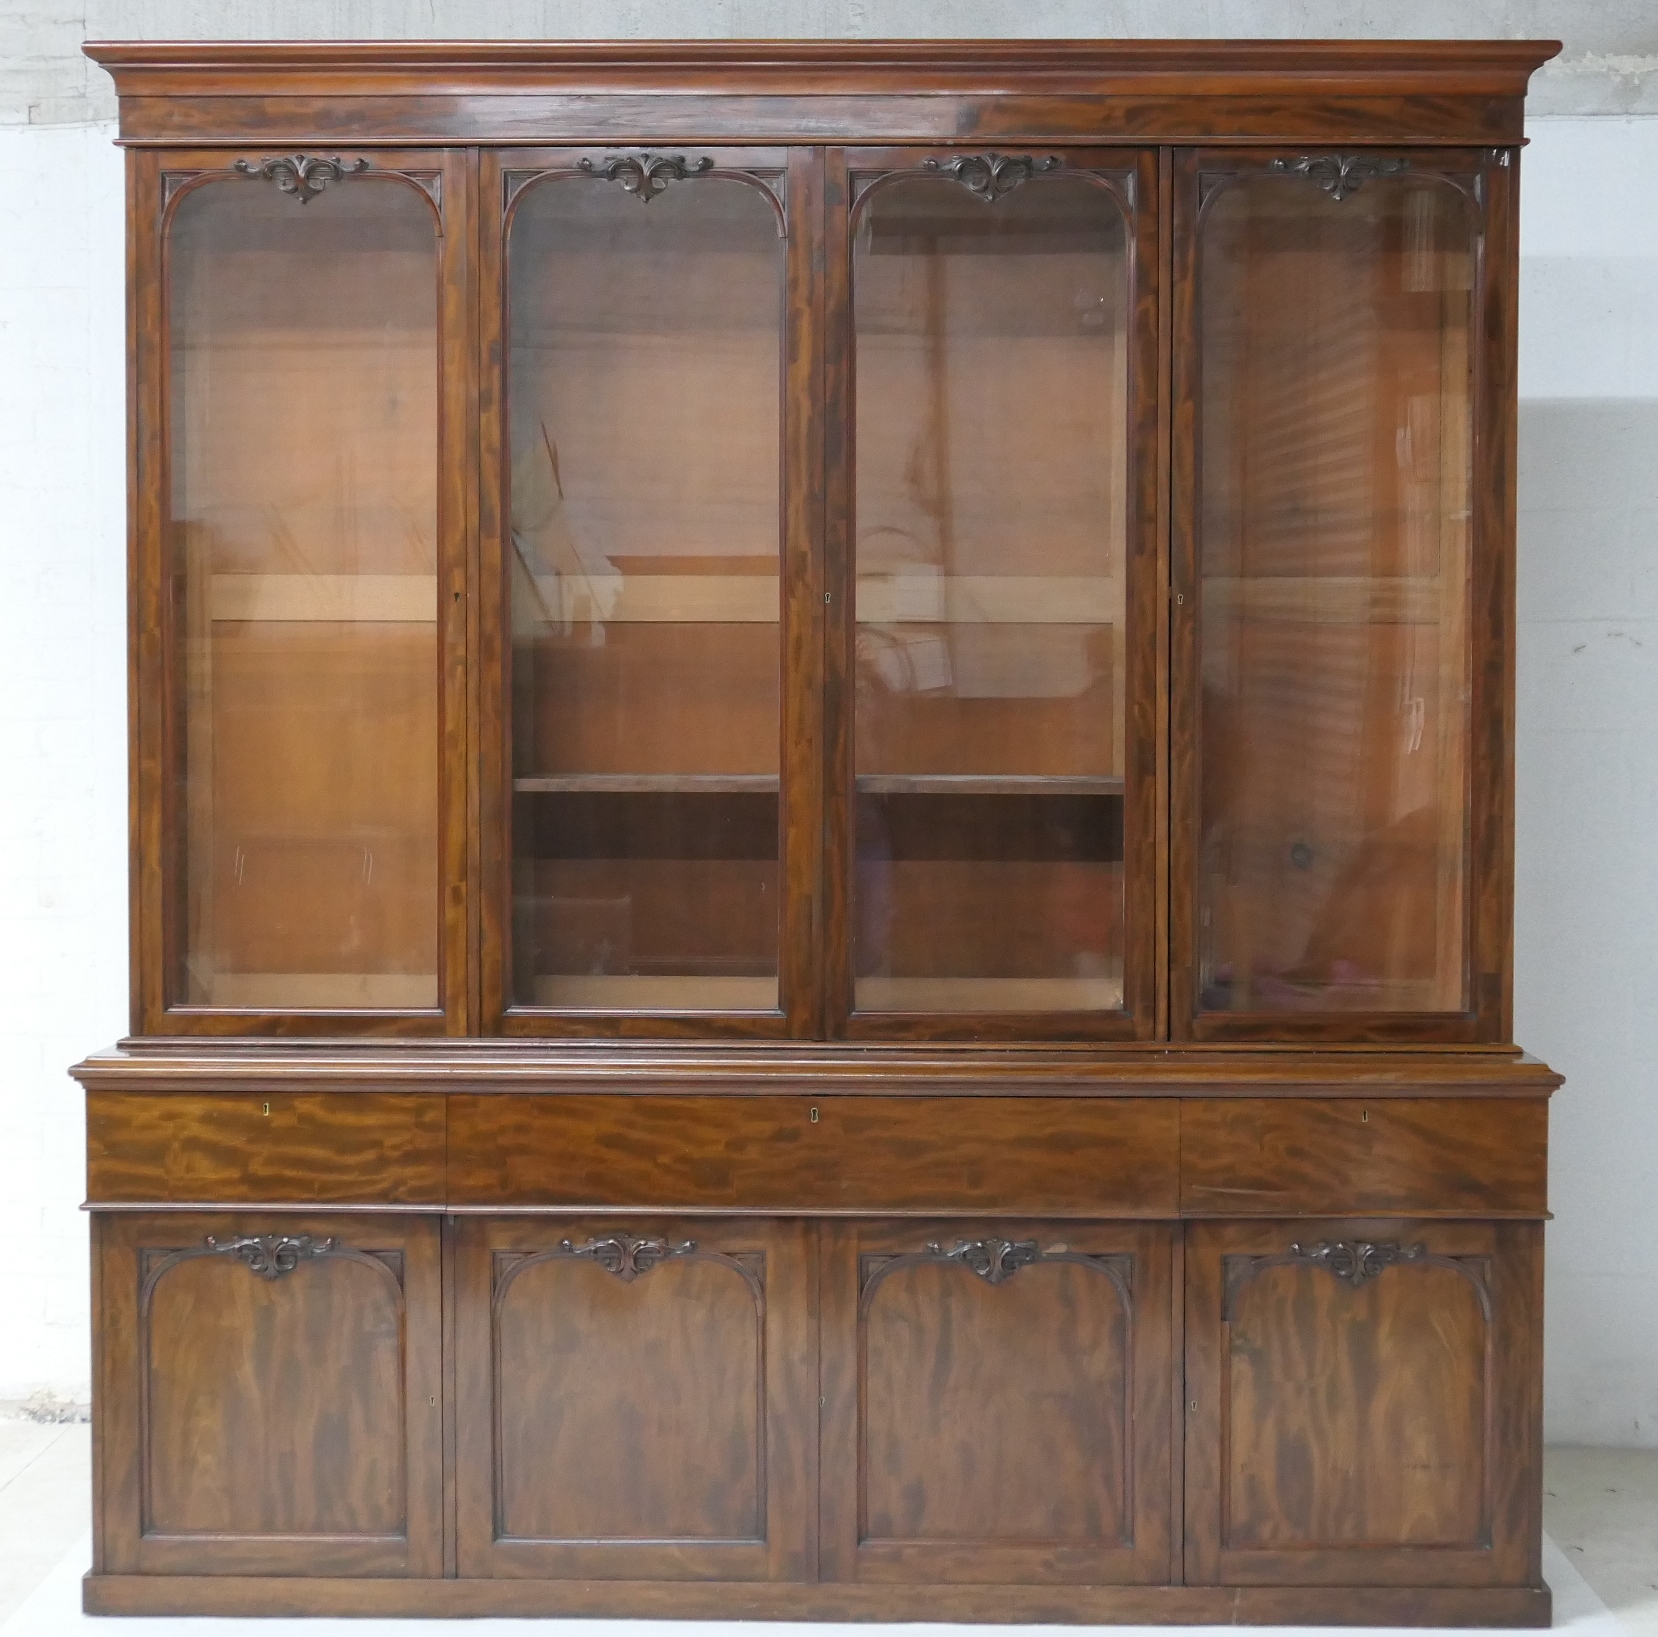 Early Victorian mahogany secretaire library bookcase, circa 1840, having a cavetto moulded cornice